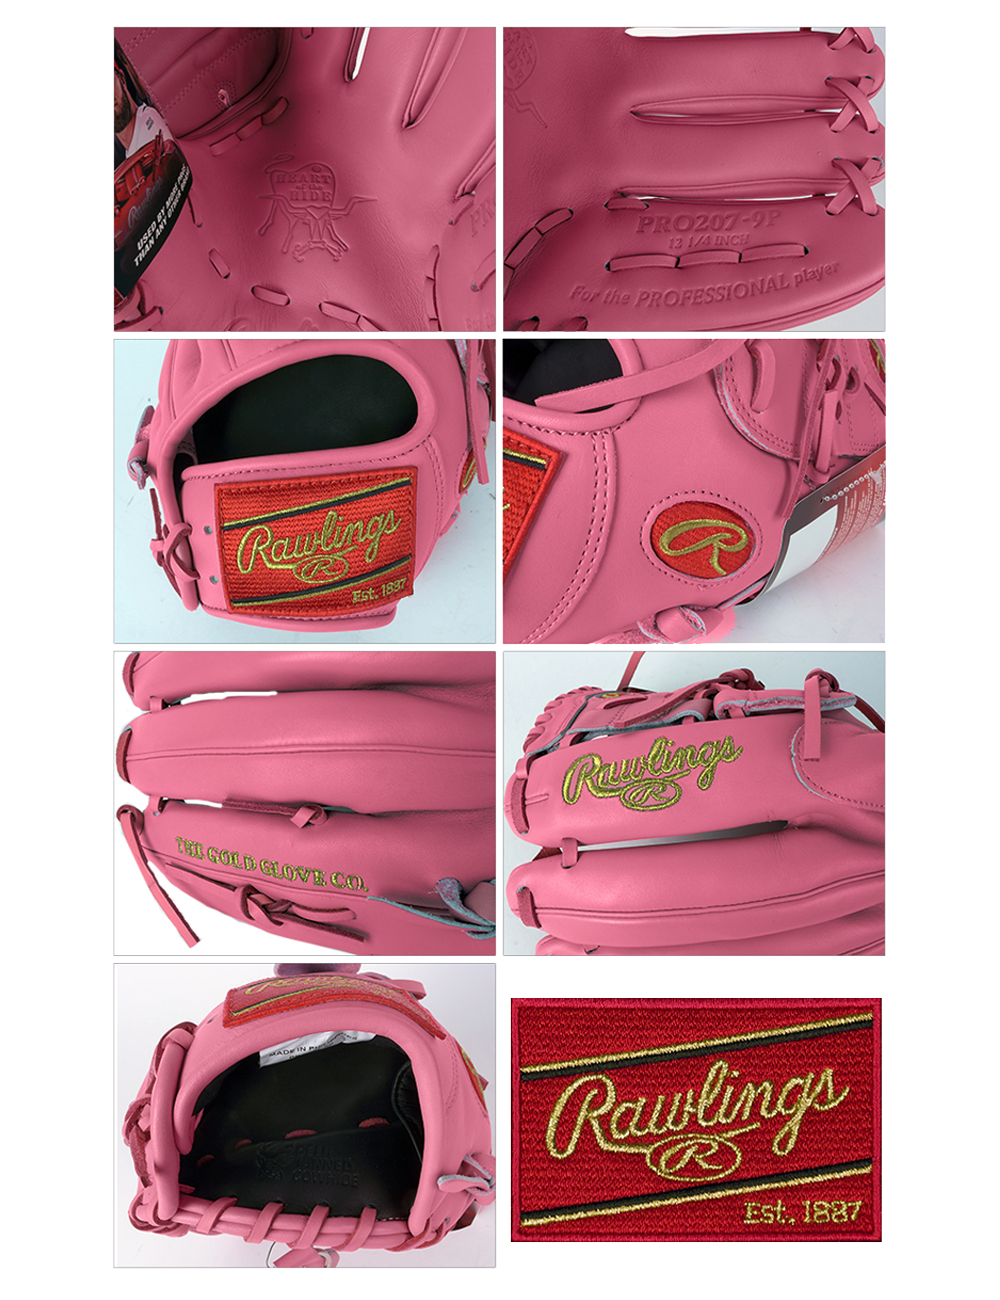 Rawlings Heart of the Hide 12.25" SMU Pink Baseball Glove PRO207-9P